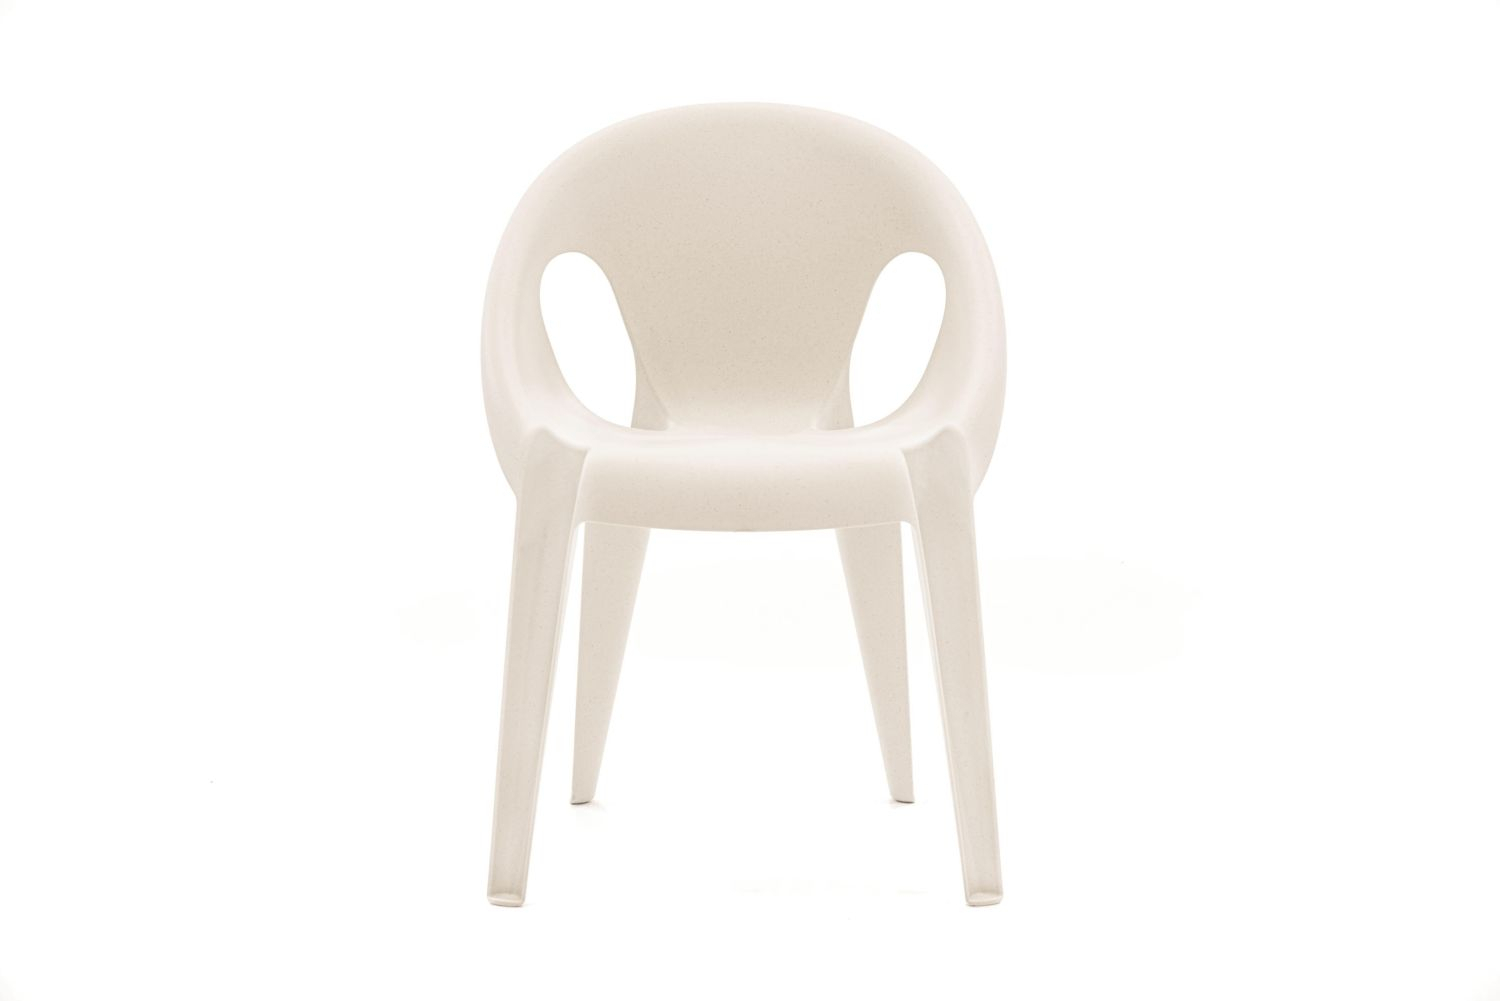 Chaise empilable Bell Plastique blanc 55x78x53 cm